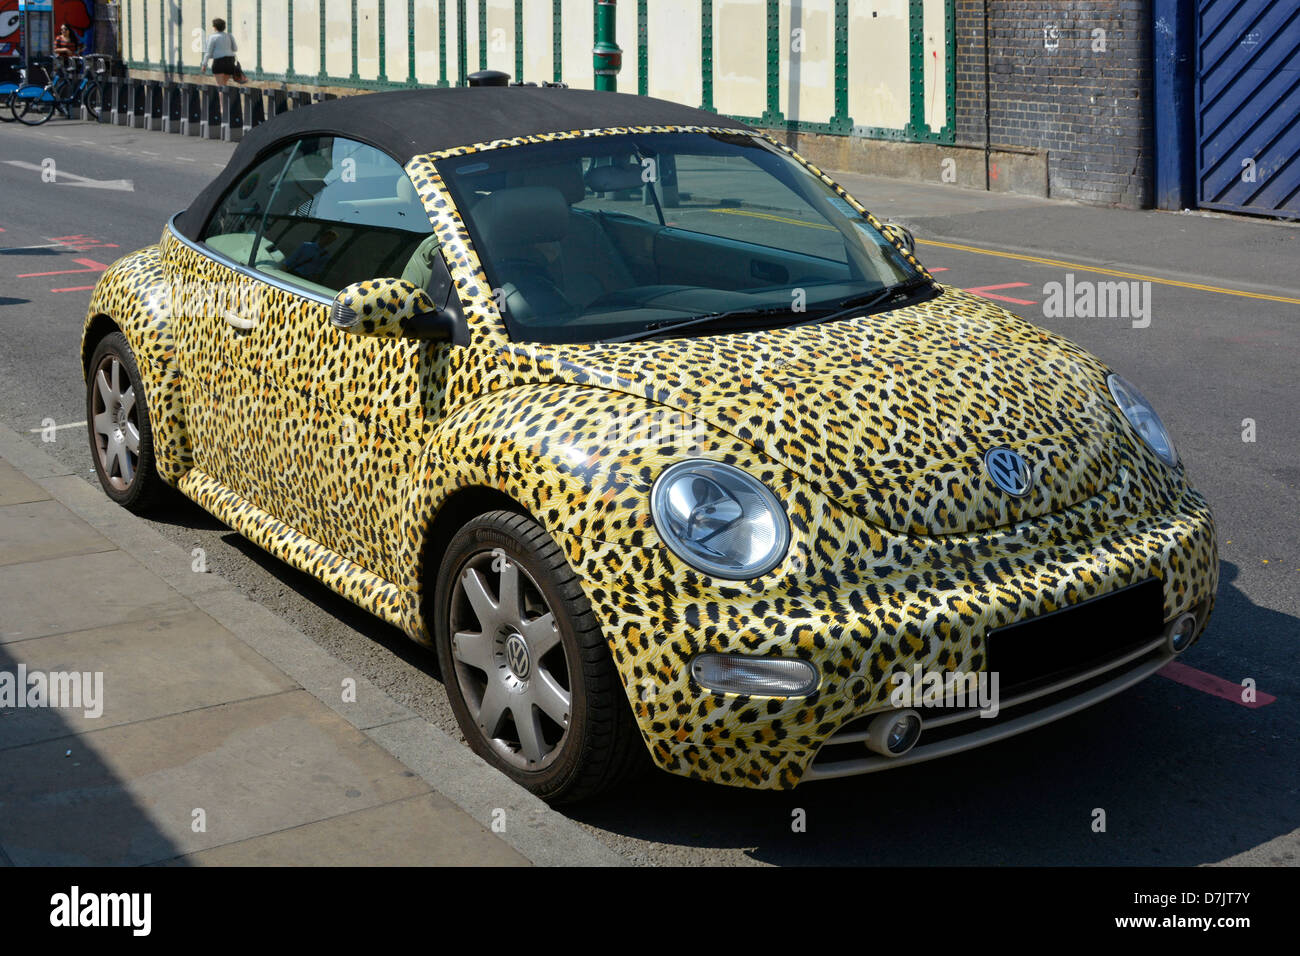 Leopards skin print covers bodywork of Volkswagen VW Beetle car  with black vinyl roof parked in sunny Brick Lane Tower Hamlets East London England UK Stock Photo